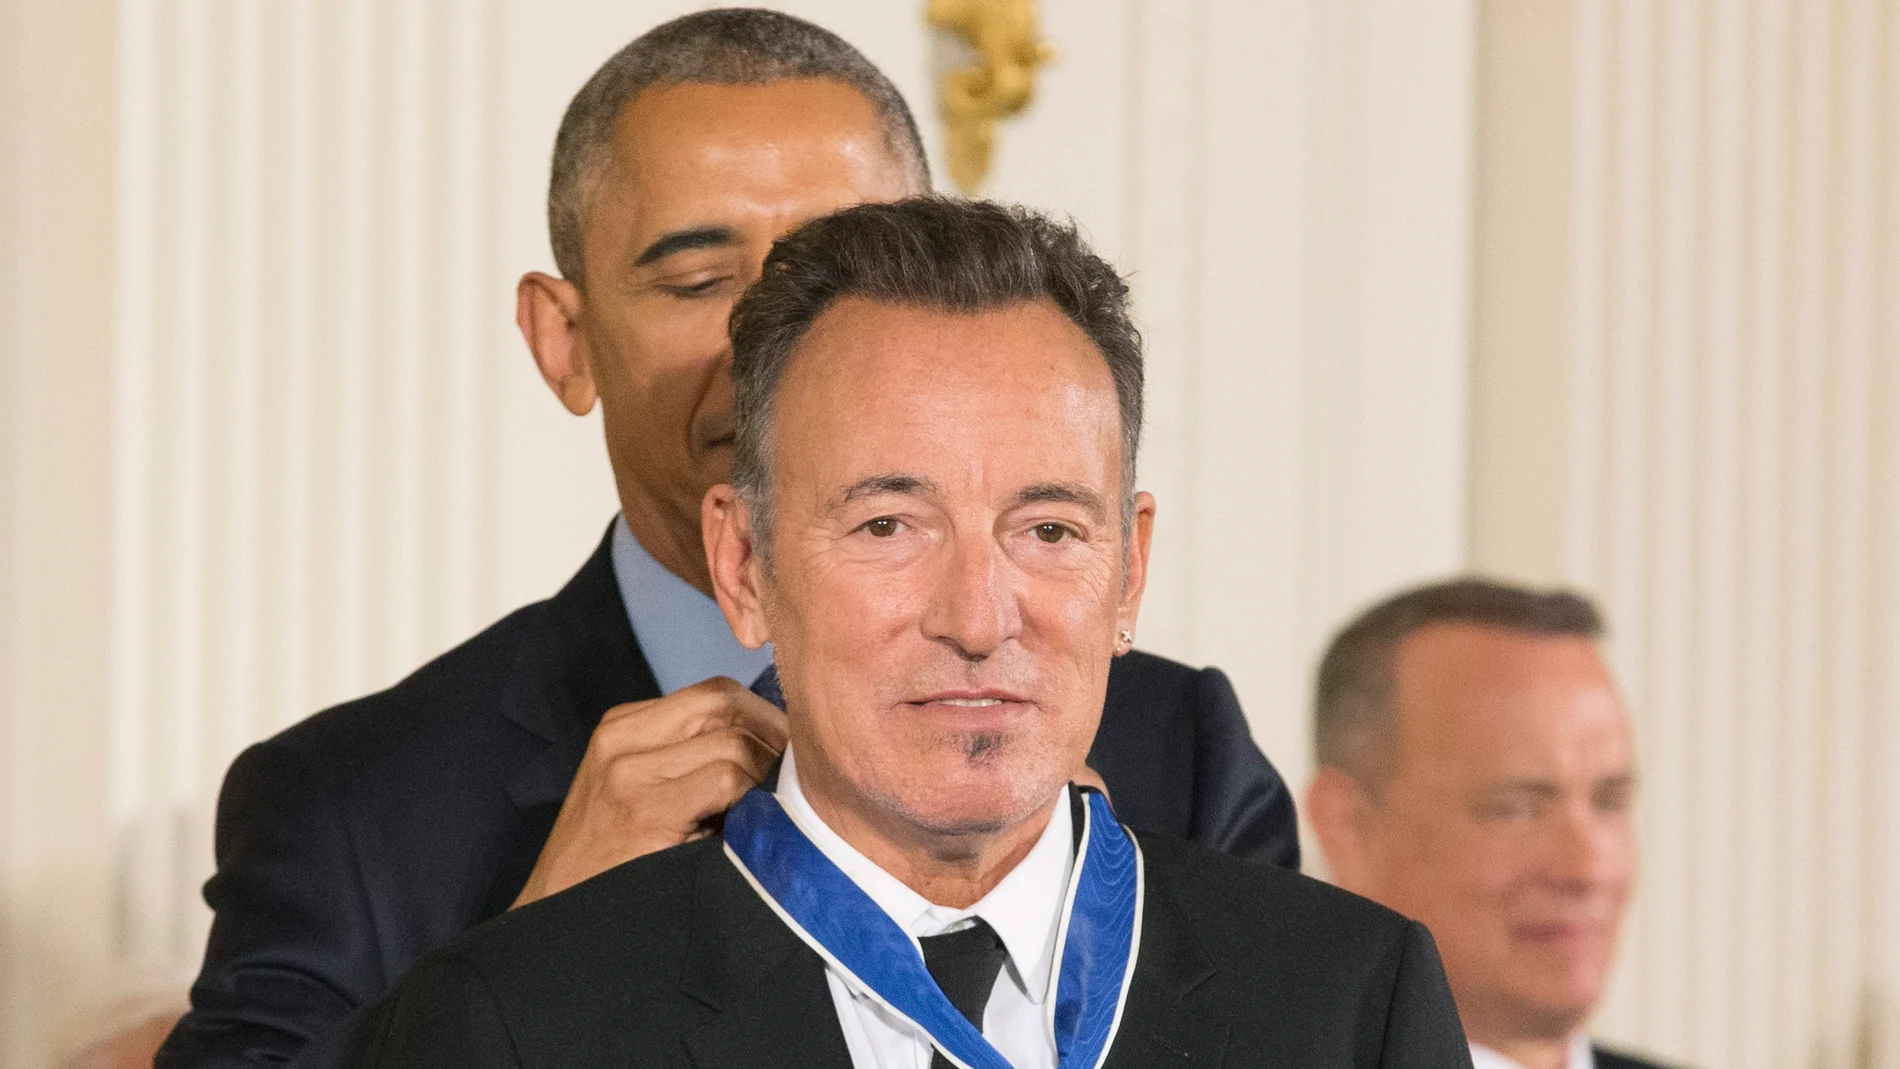 Obama condecora a Bruce Springsteen